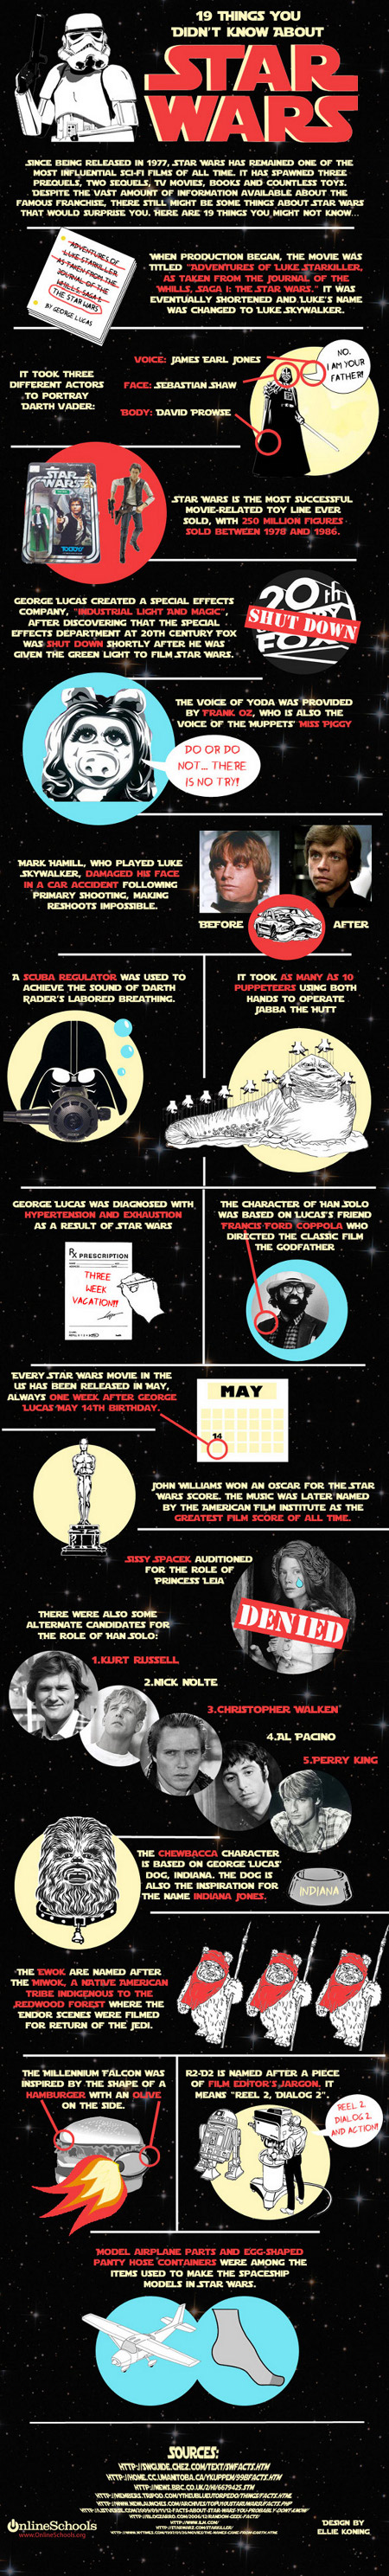 star-wars-infographic-full